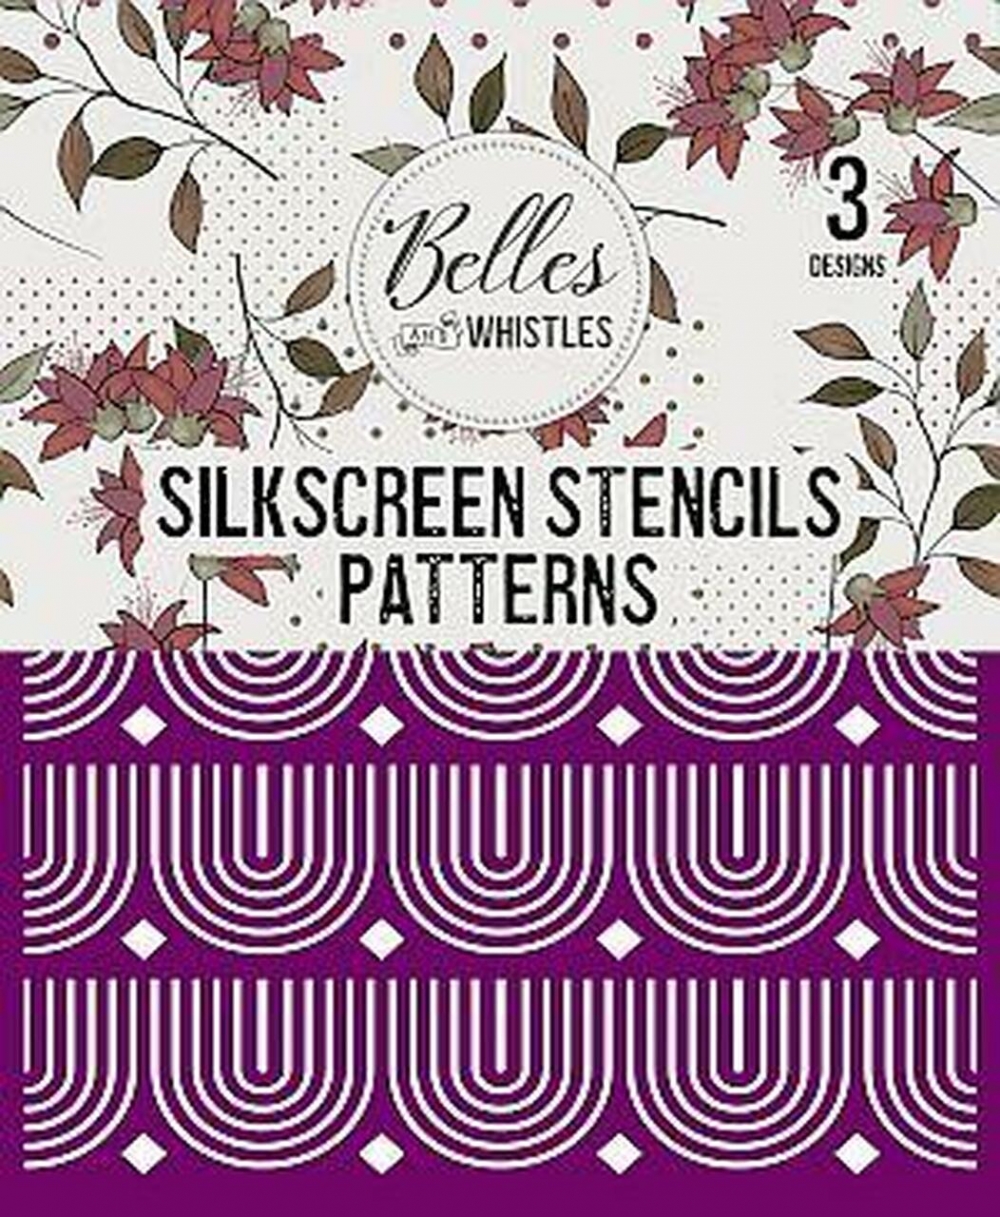 Belles and Whistles Silkscreen Stencil – Lightweight Adhesive – Reusable – Patterns 20x25cm